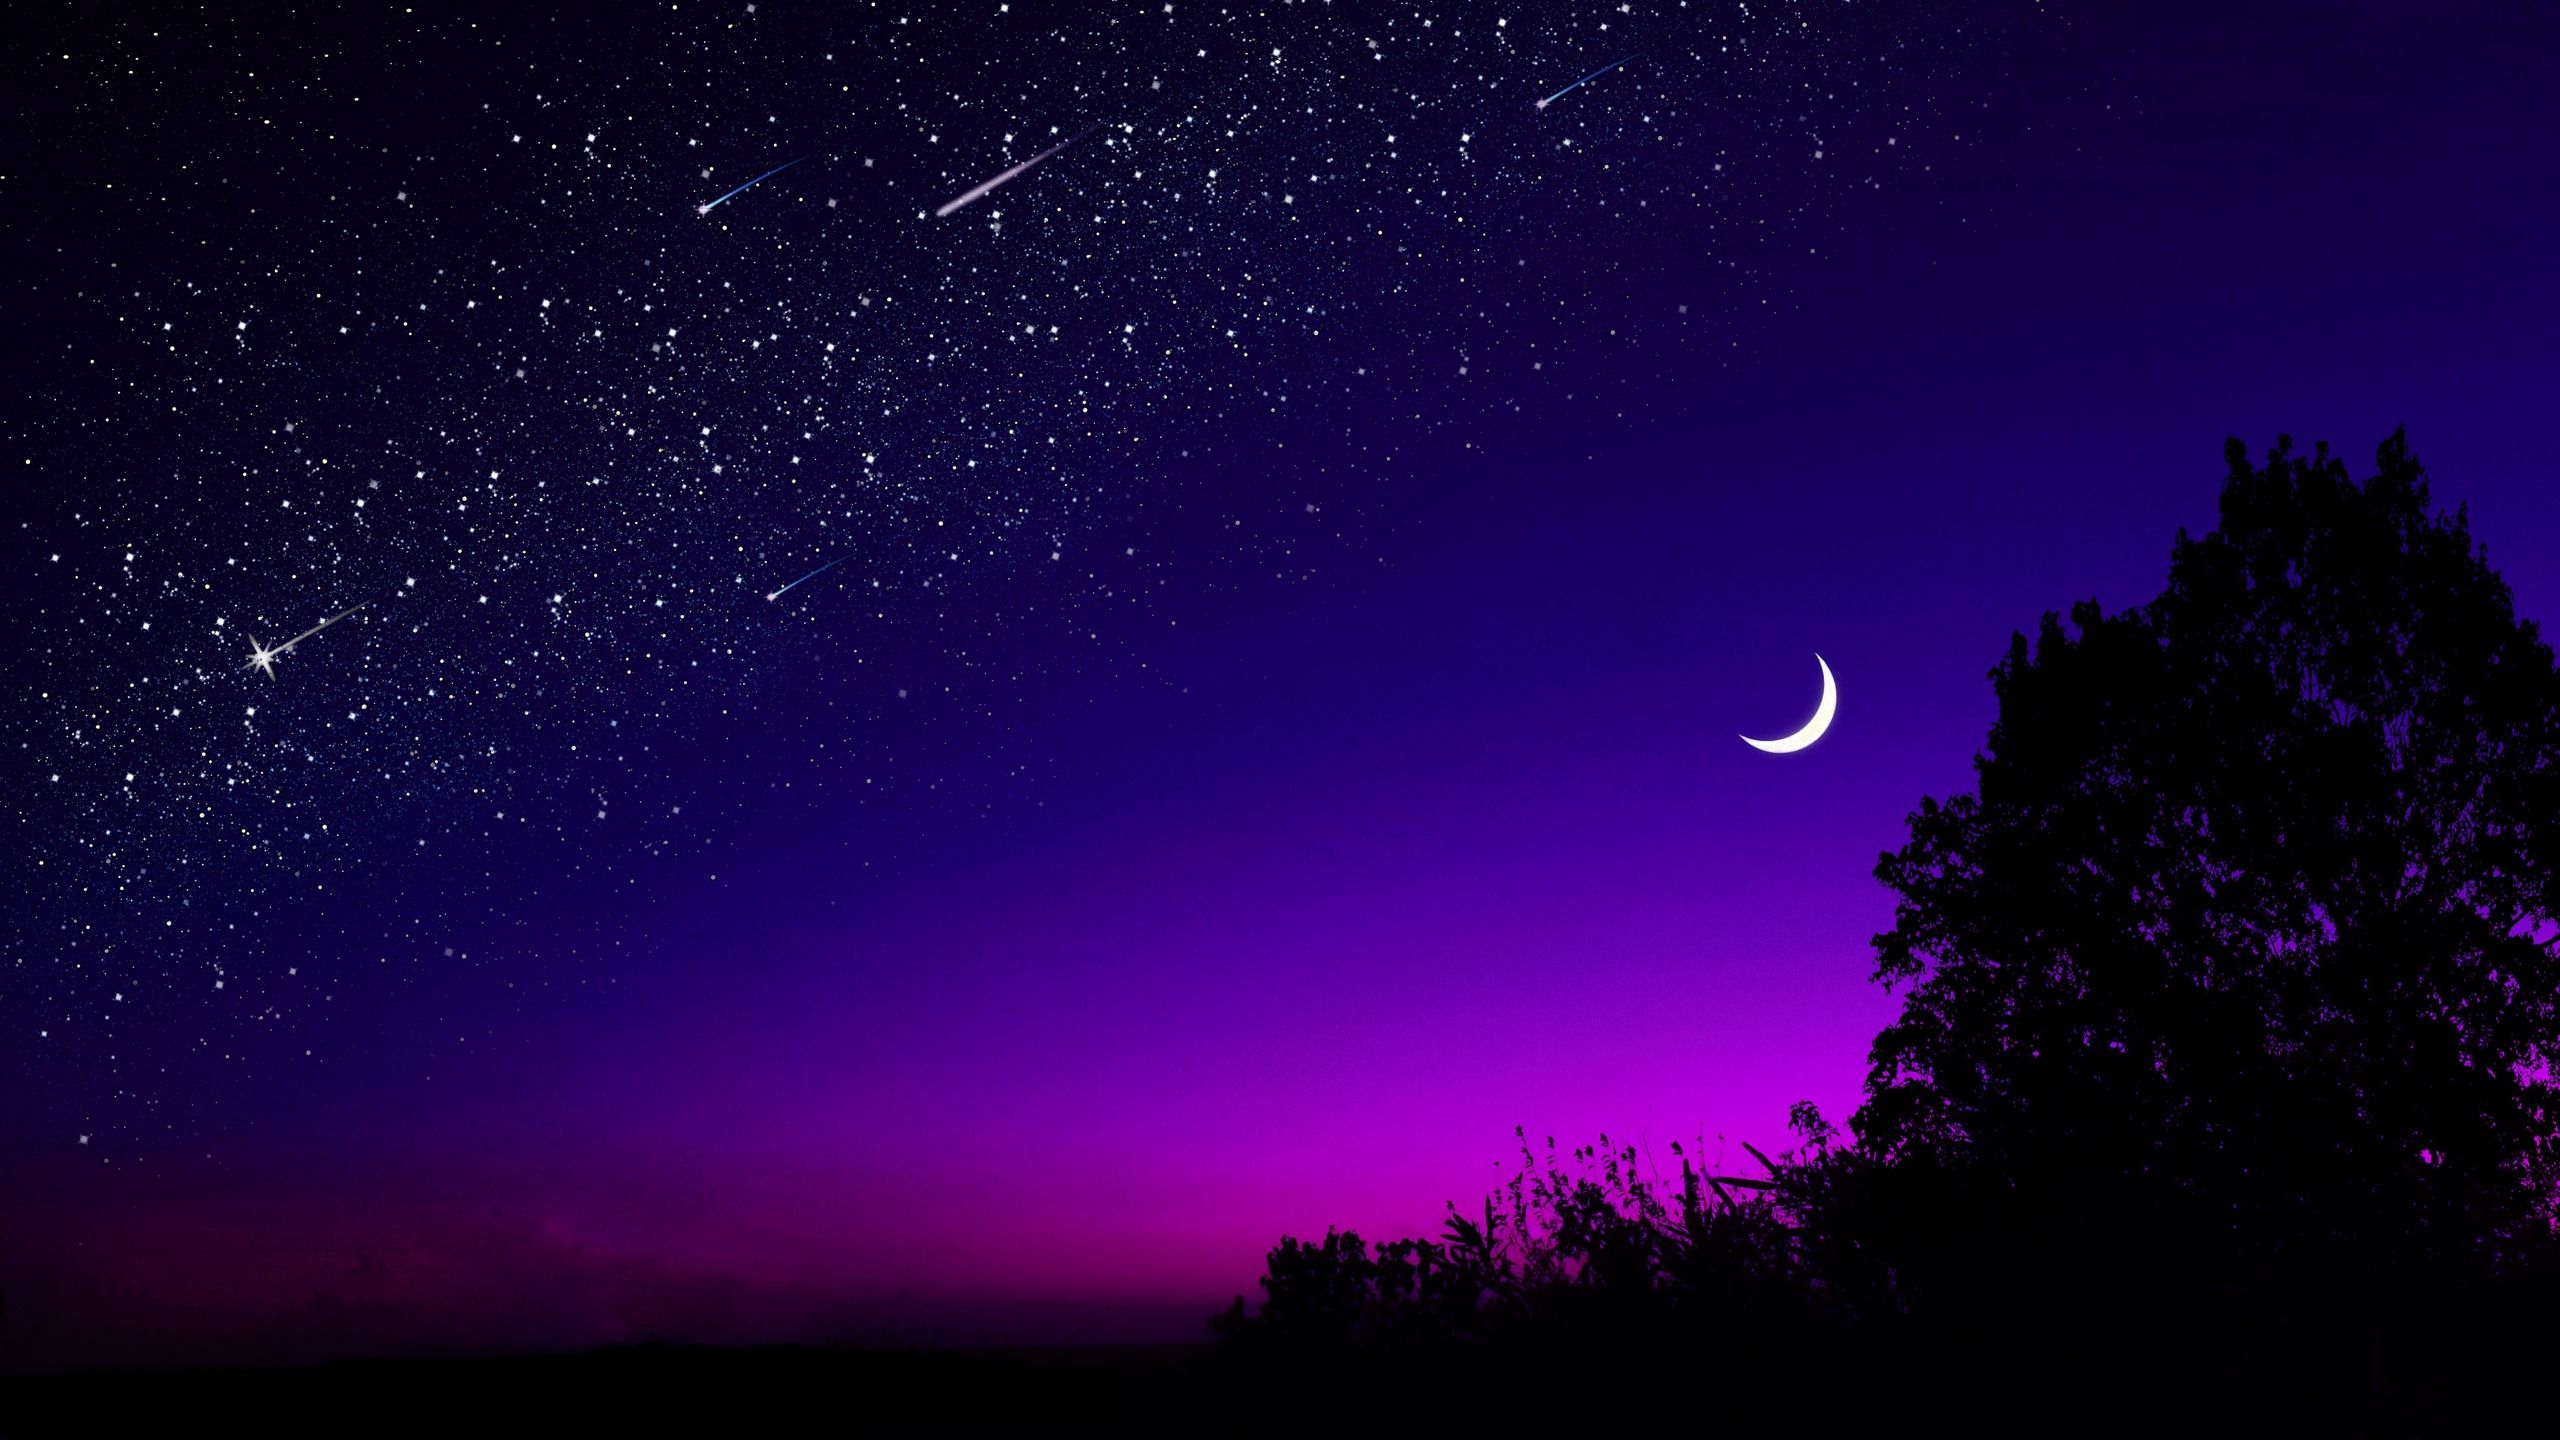 Download wallpaper 2560x1440 moon, tree, starry sky, night, stars, dark widescreen 16:9 HD background